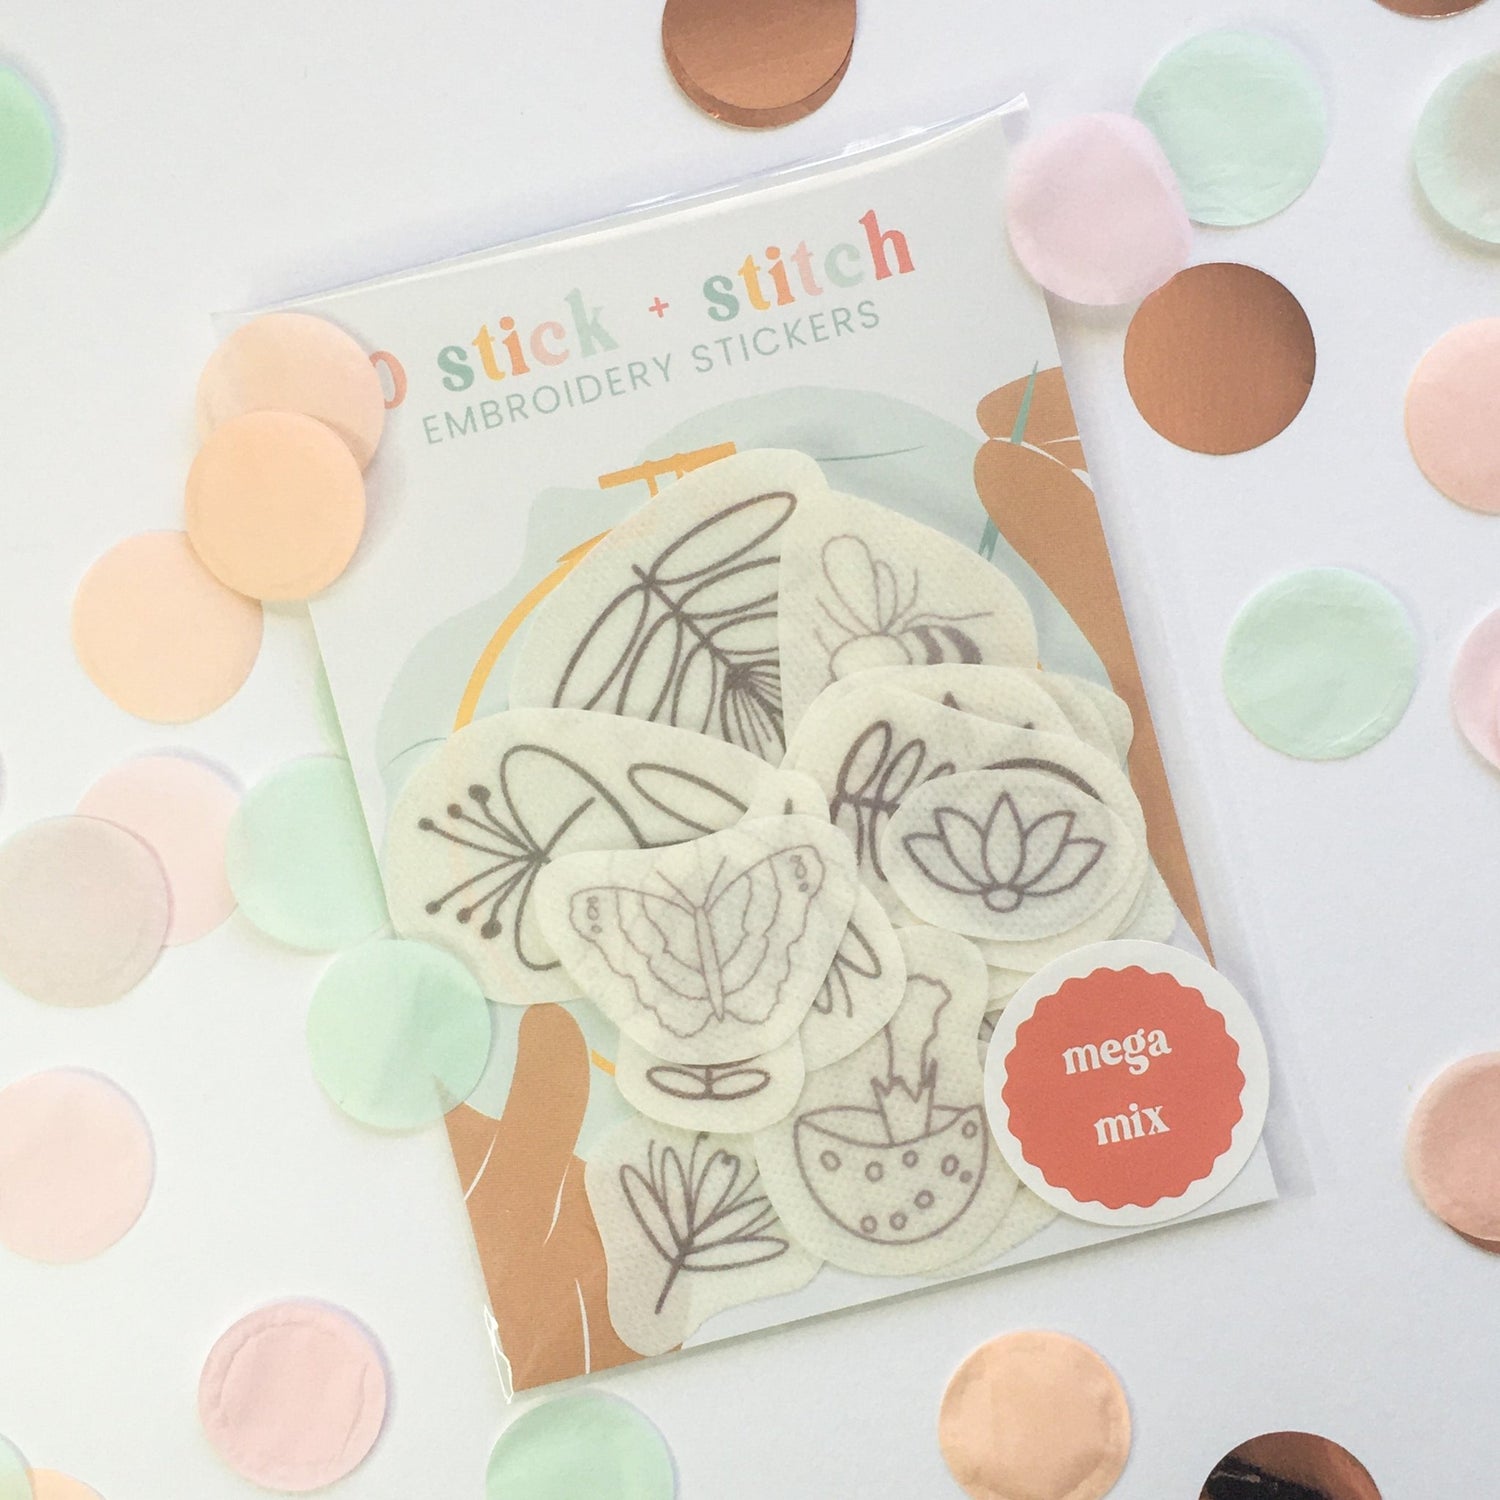 Mega Mix Stick and Stitch Embroidery Stickers